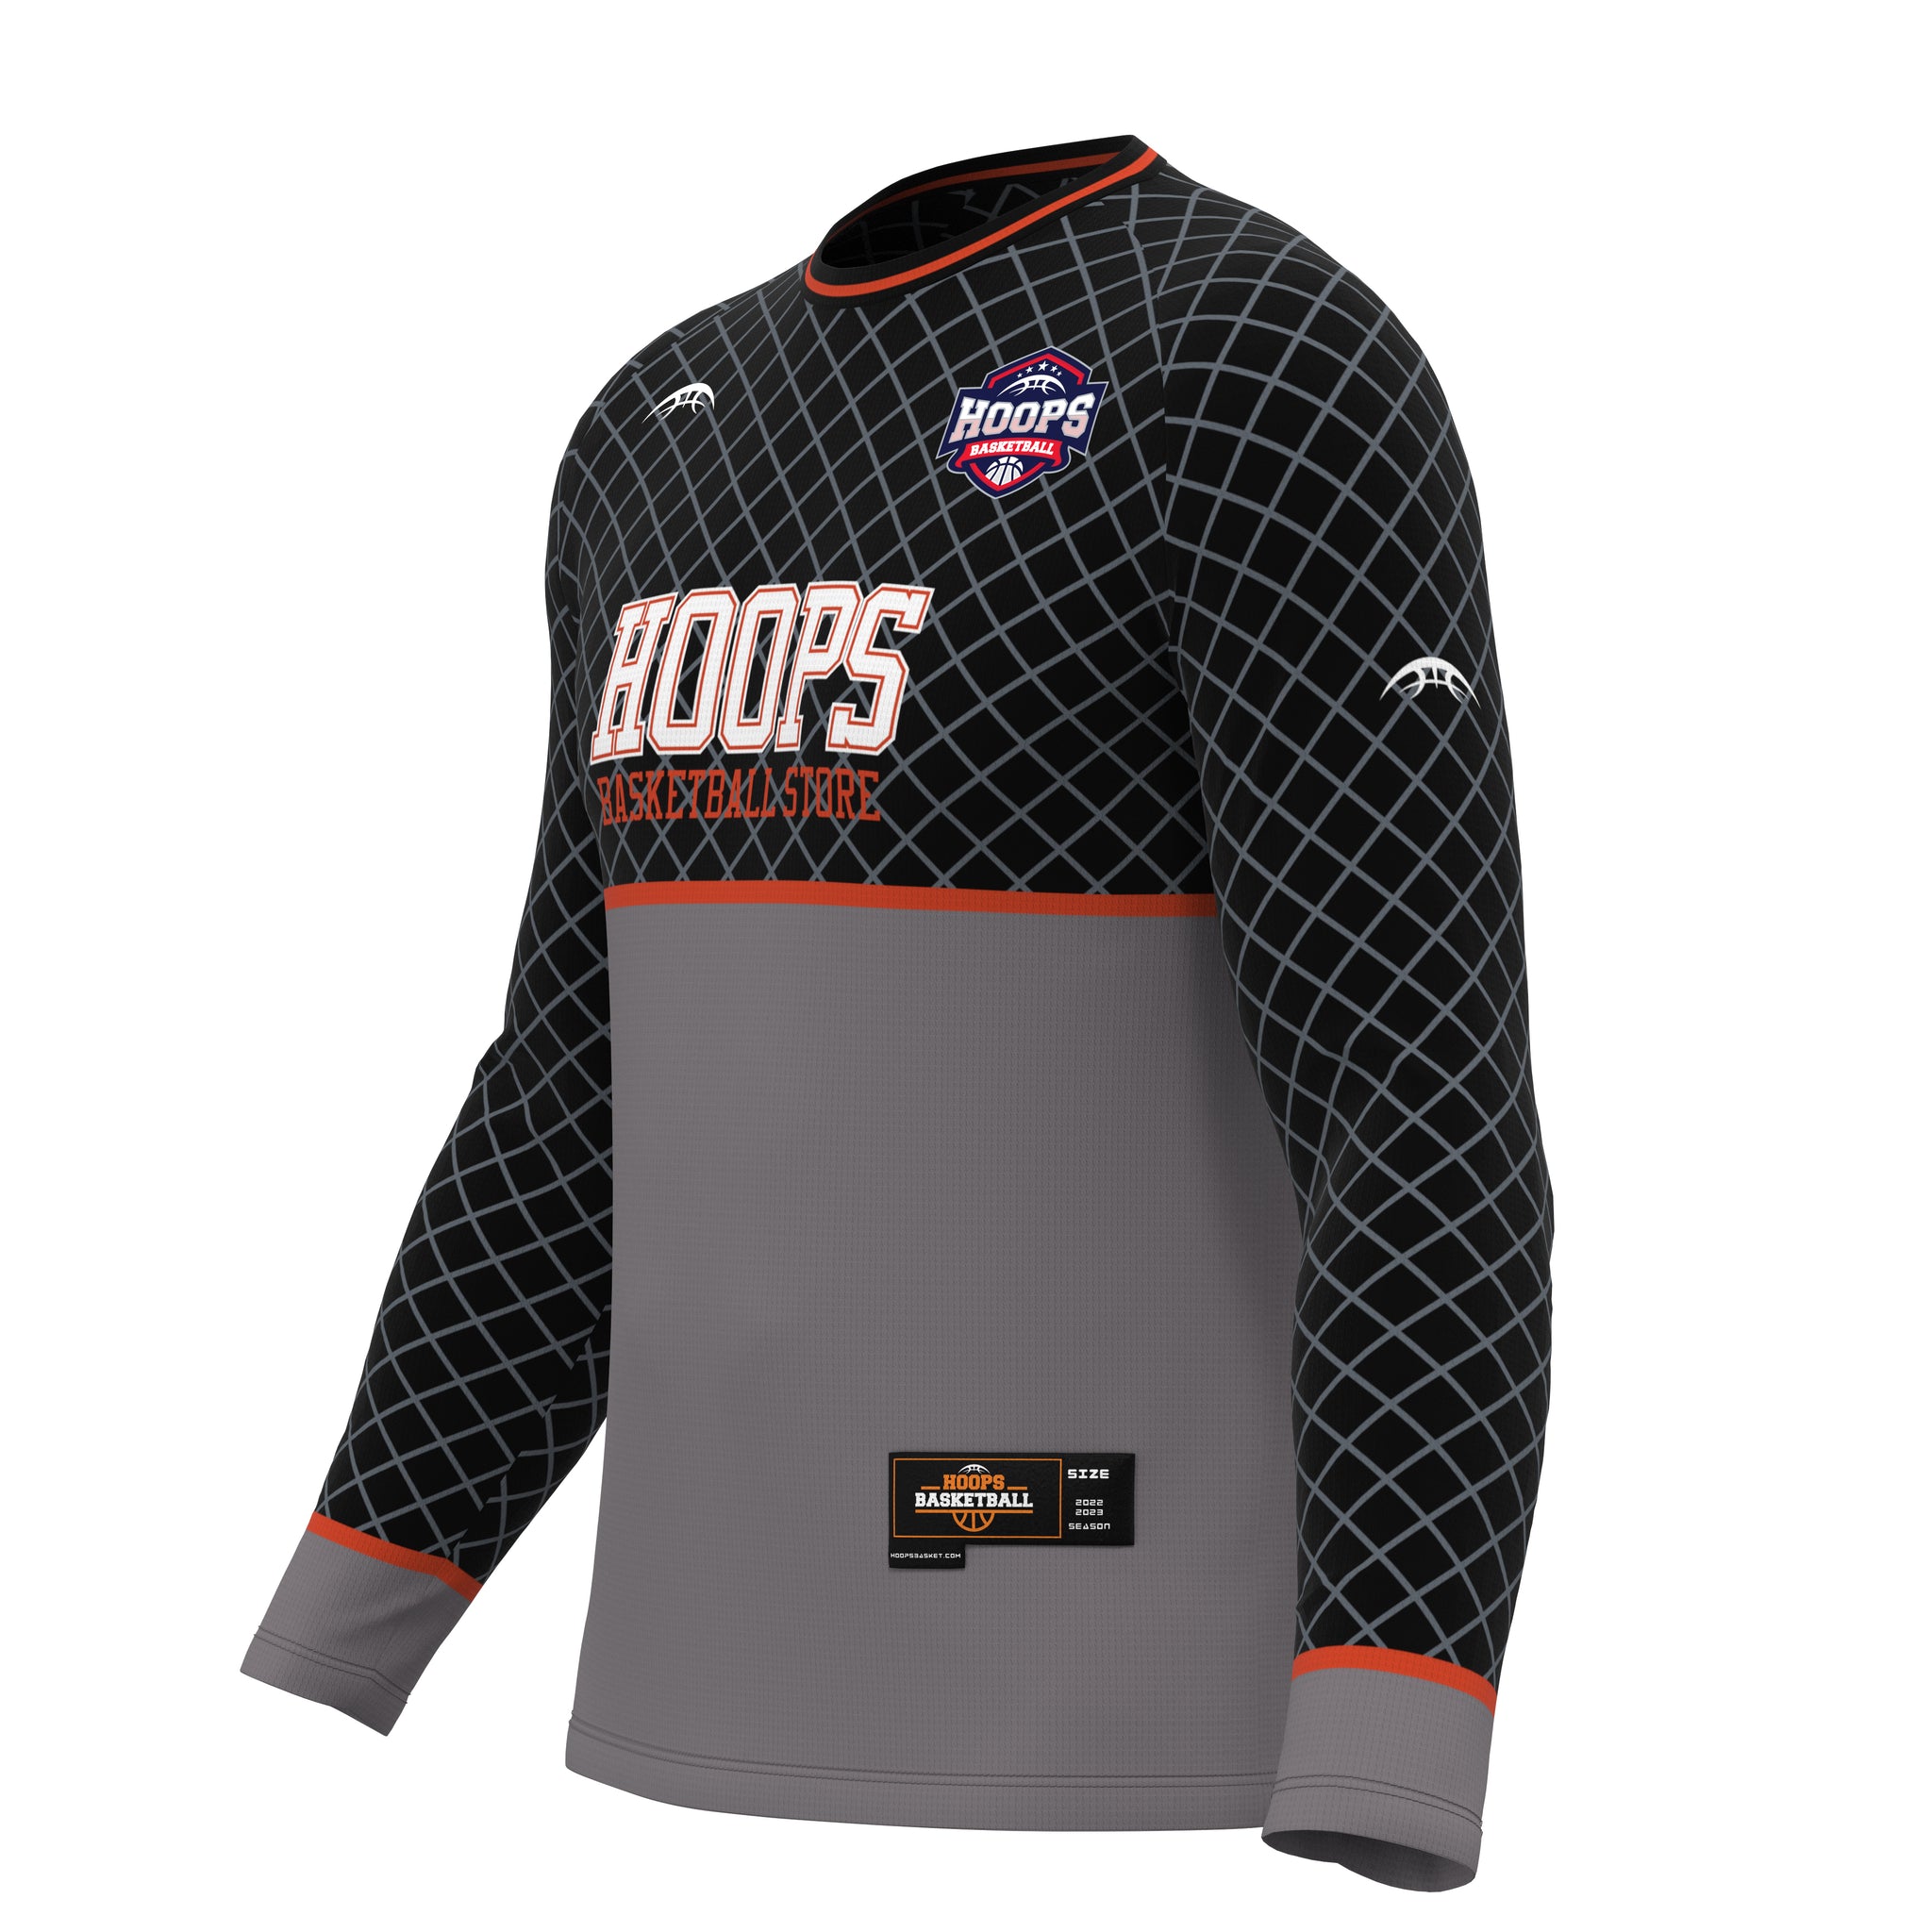 Custom Digital Print Basketball Warm-Up Shirt - 1013